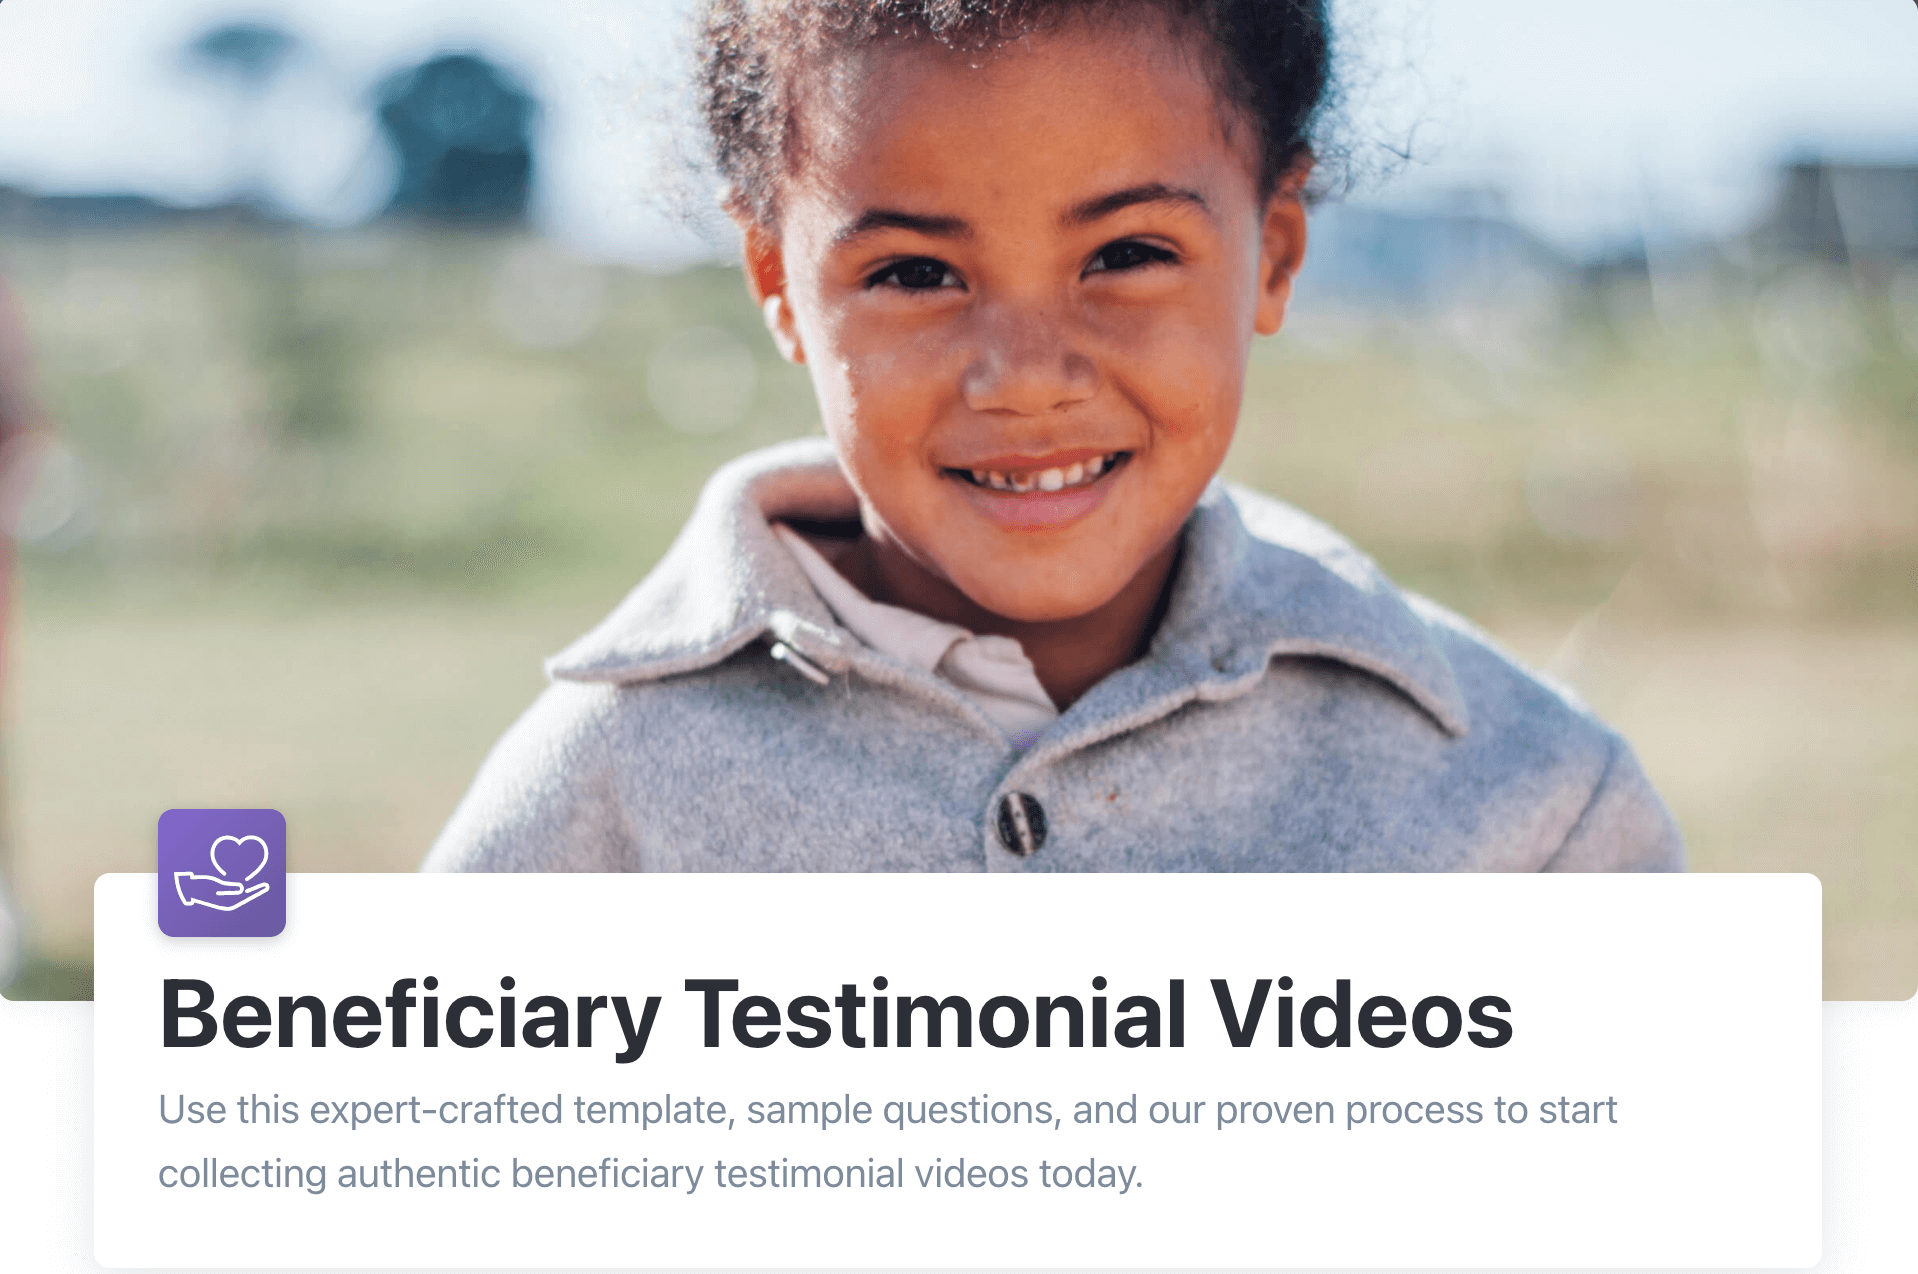 Beneficiary testimonial video template. 